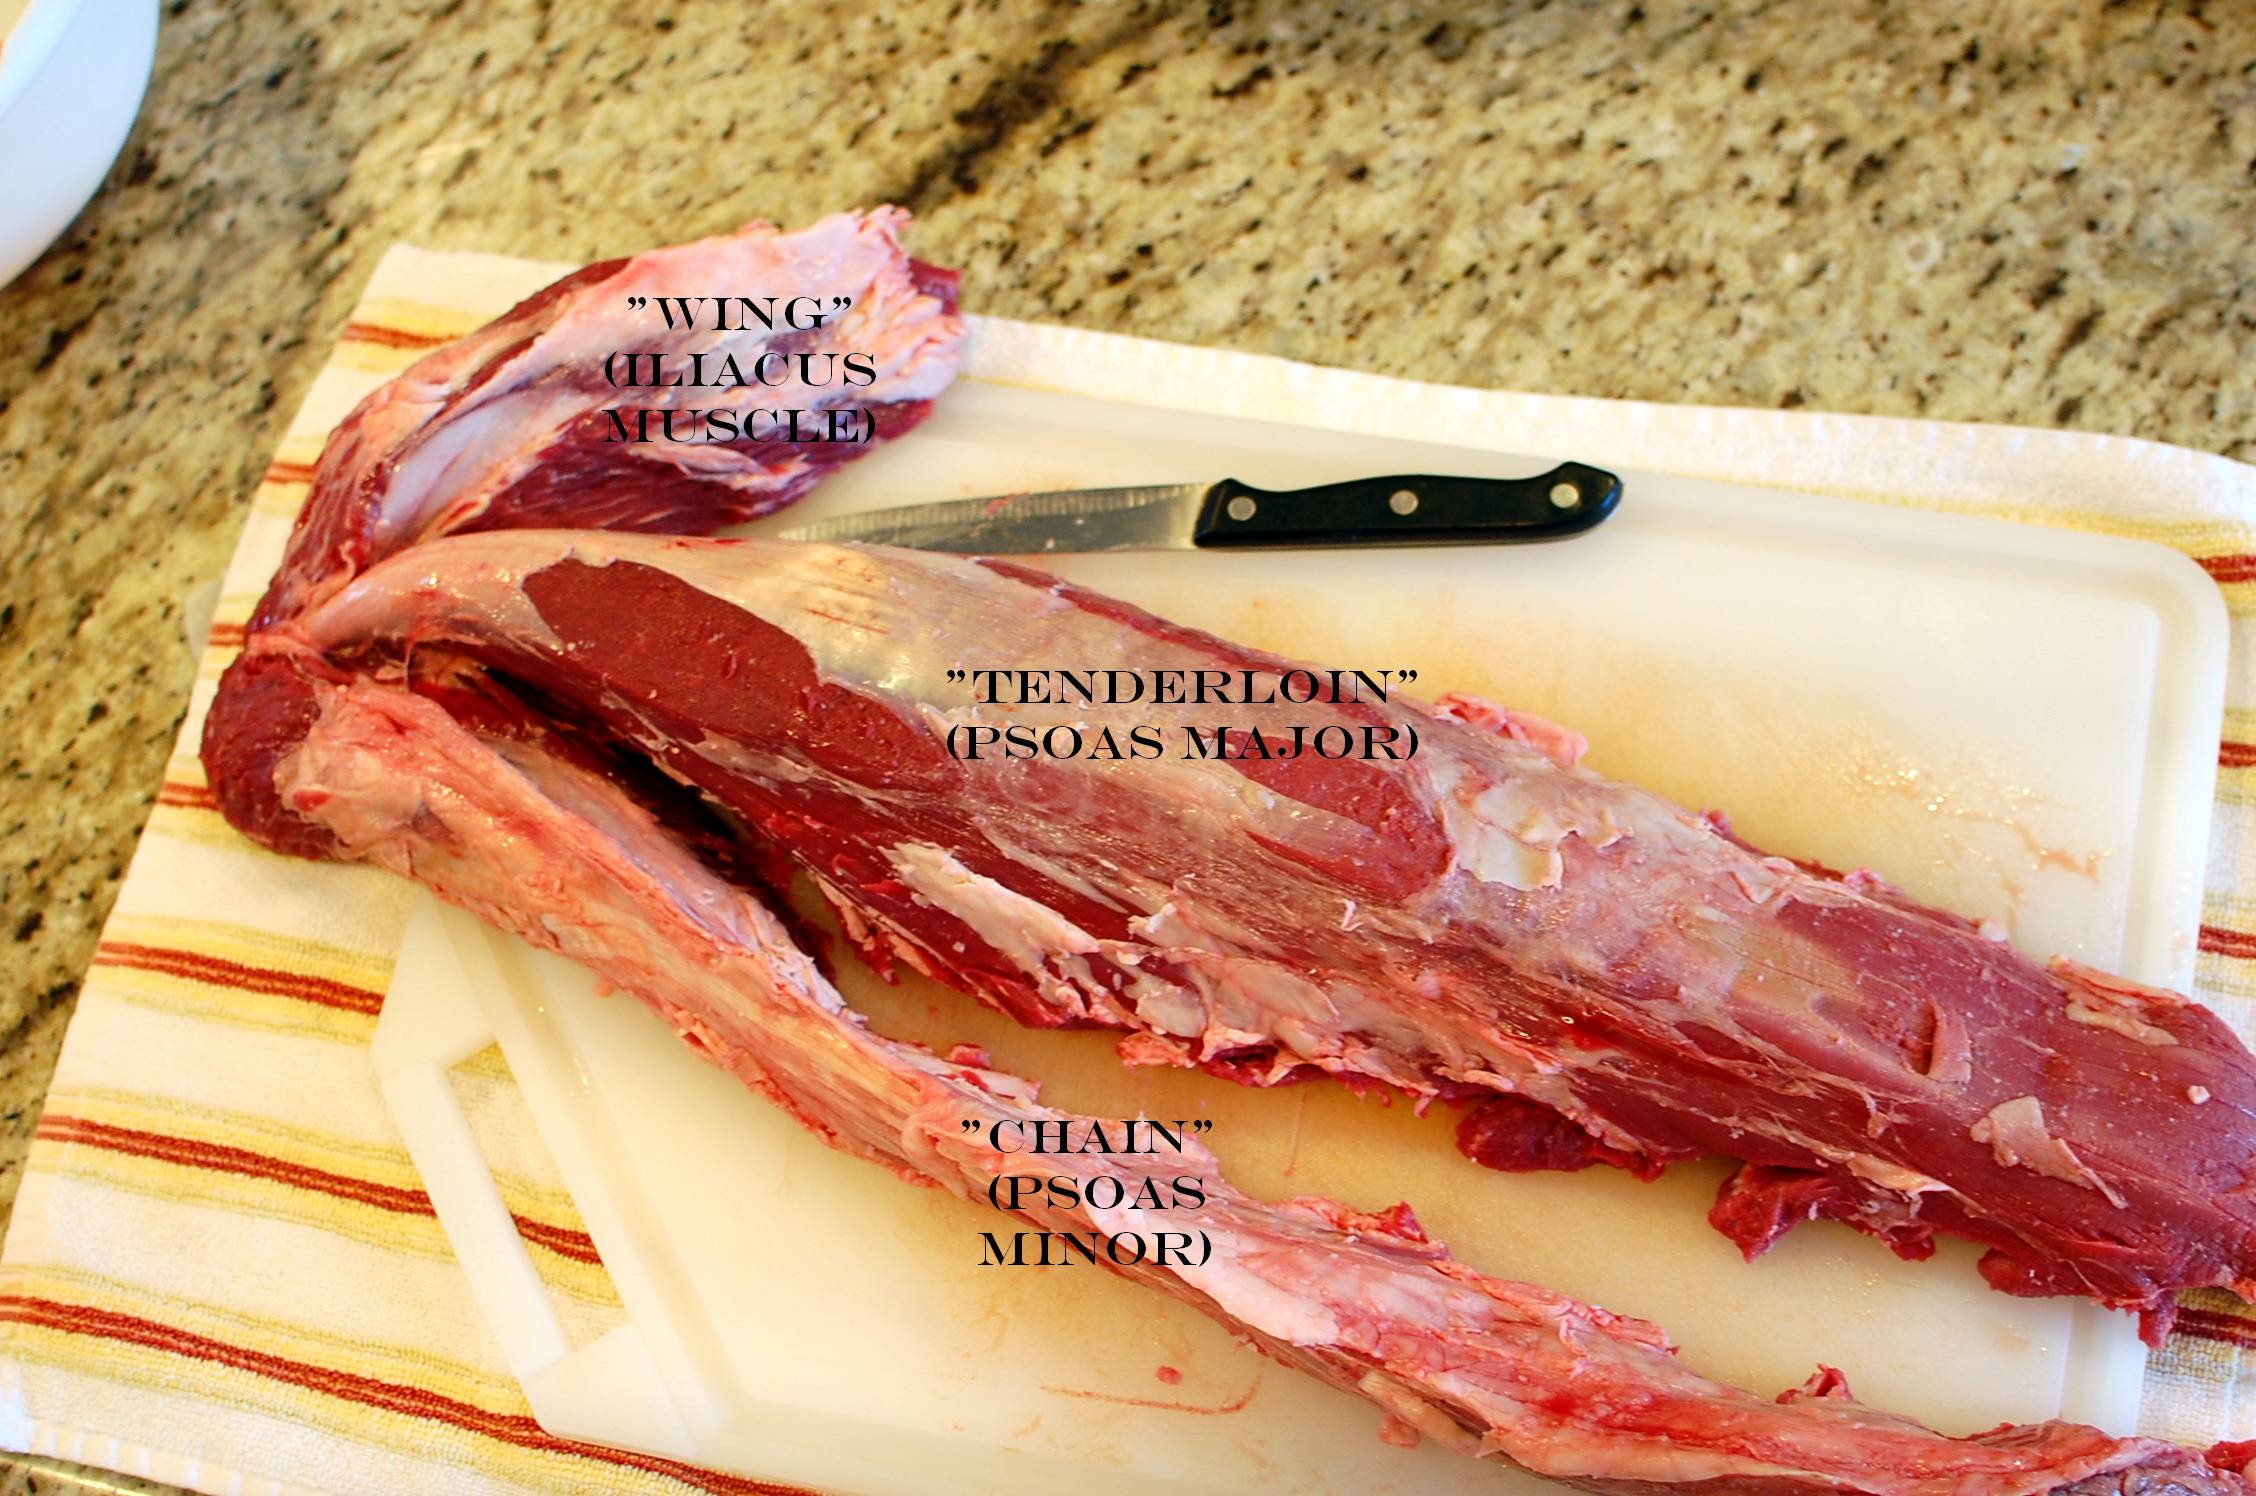 Beef Tenderloin Butcher Chart